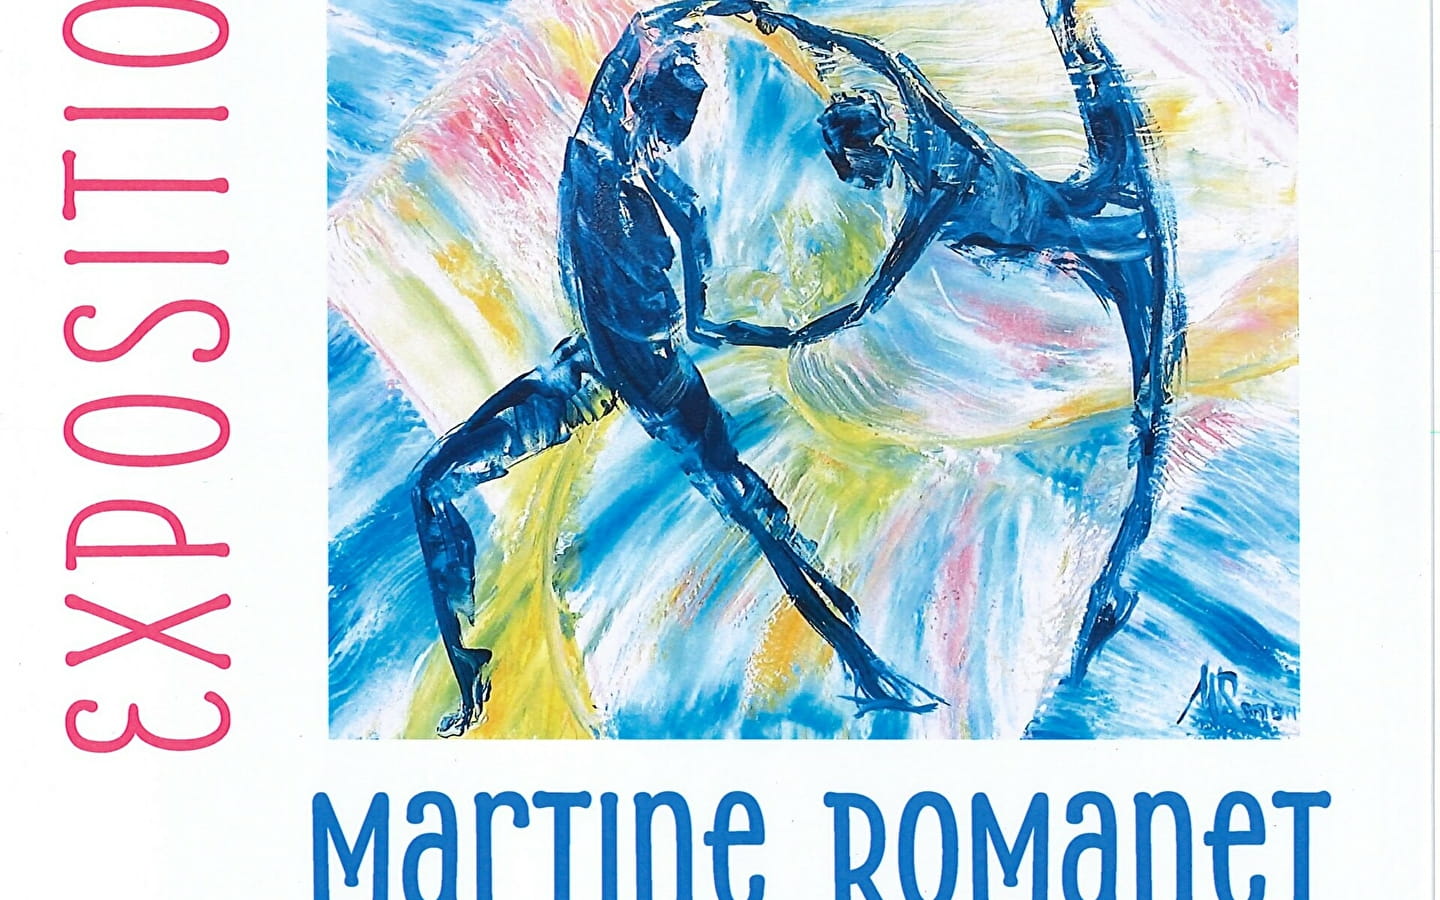 Exhibition: Martine Romanet at the MIA